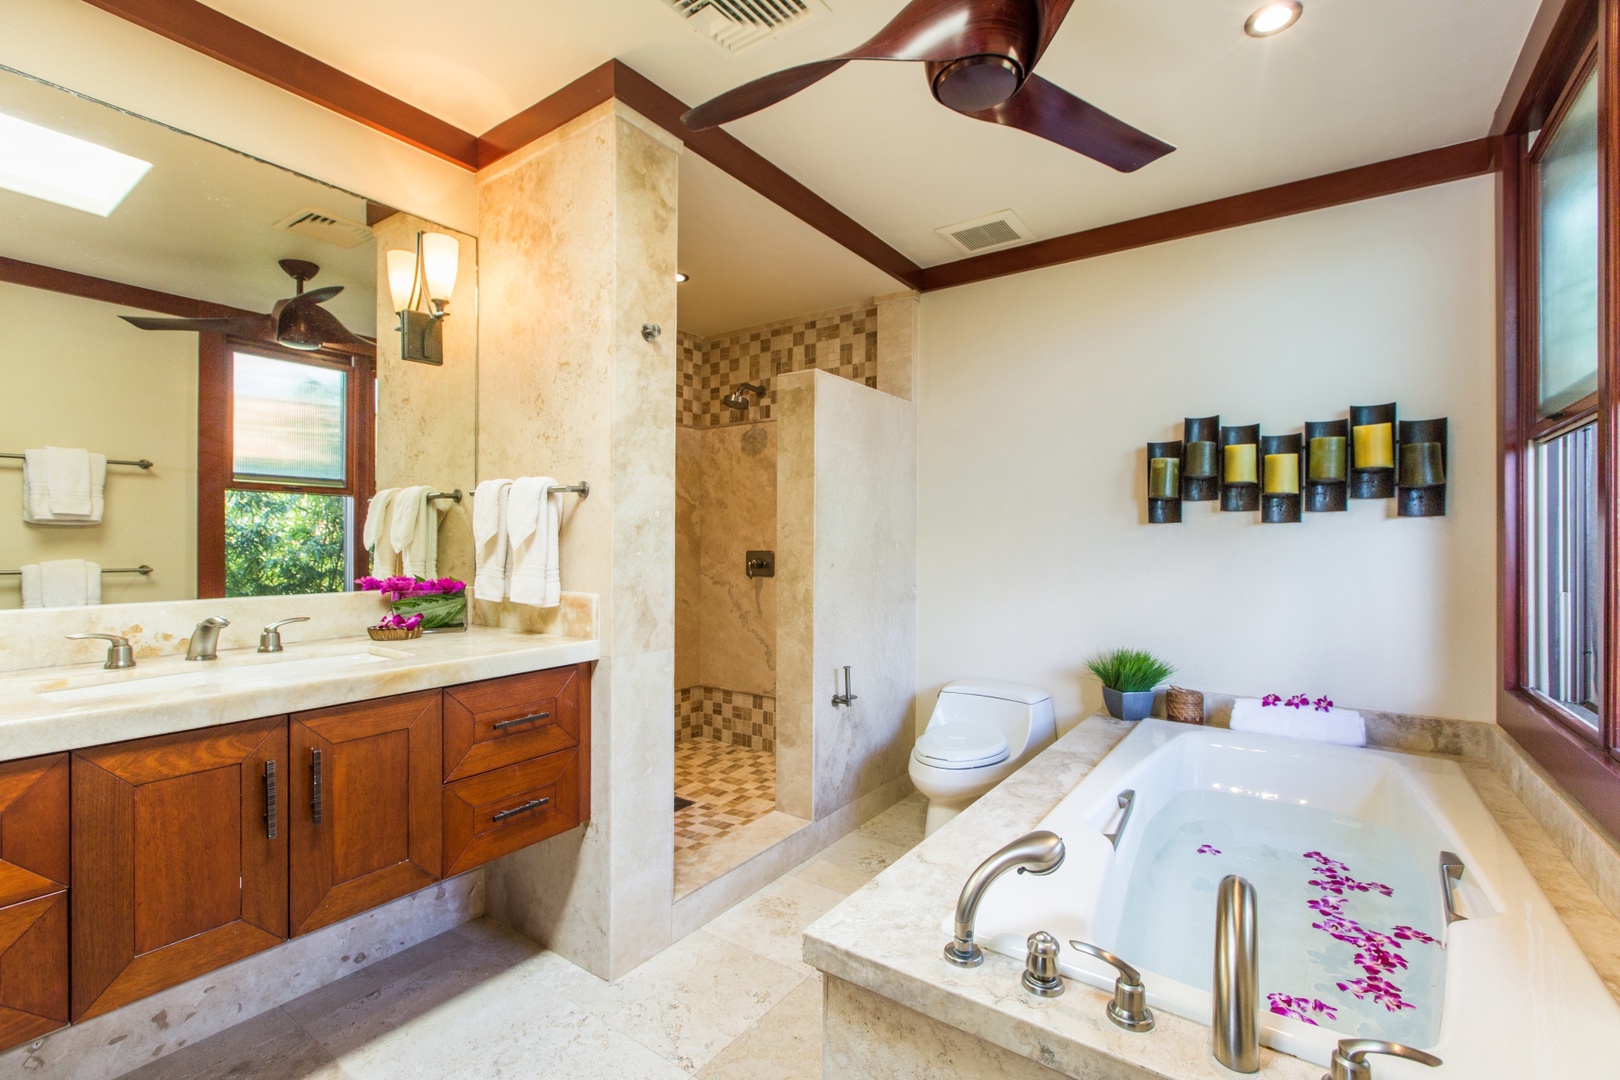 Honolulu Vacation Rentals, Royal Kahala Estate 4 Bedroom - Second Primary Bathroom